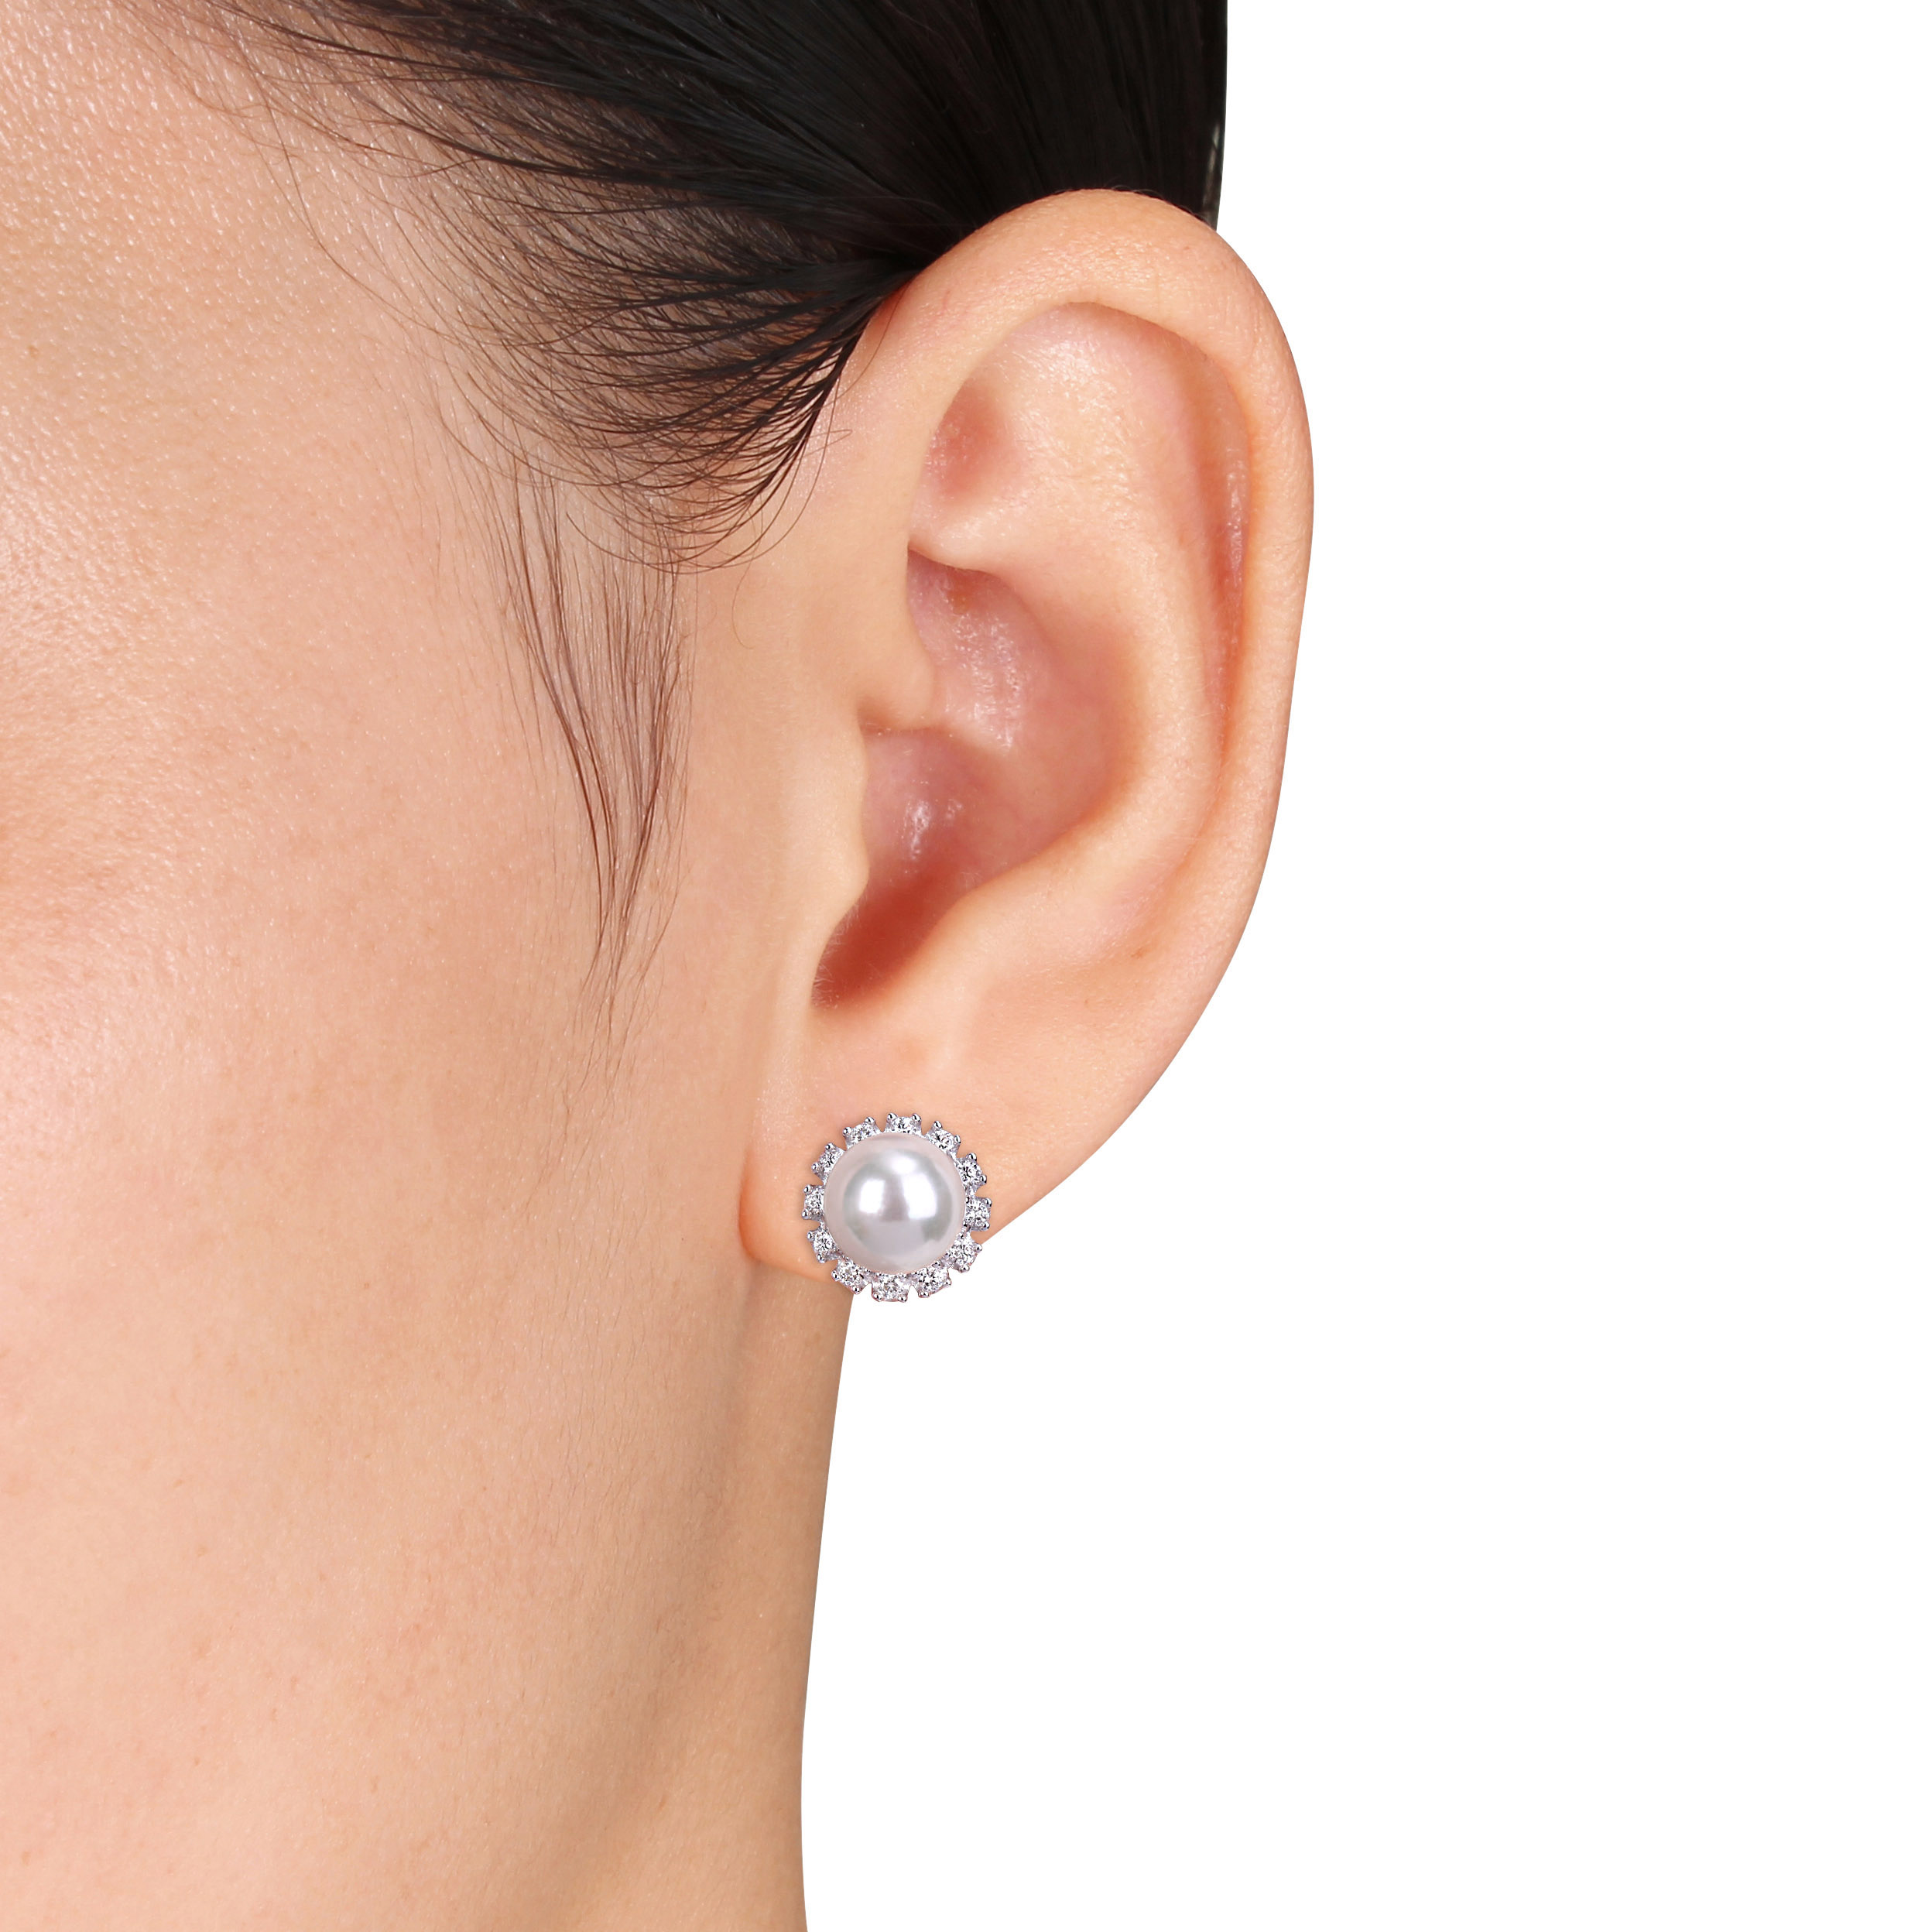 3/8 CT TW Diamond and 8 - 8.5 MM White Japanese Akoya Pearl Flower Stud Earrings in 14k White Gold